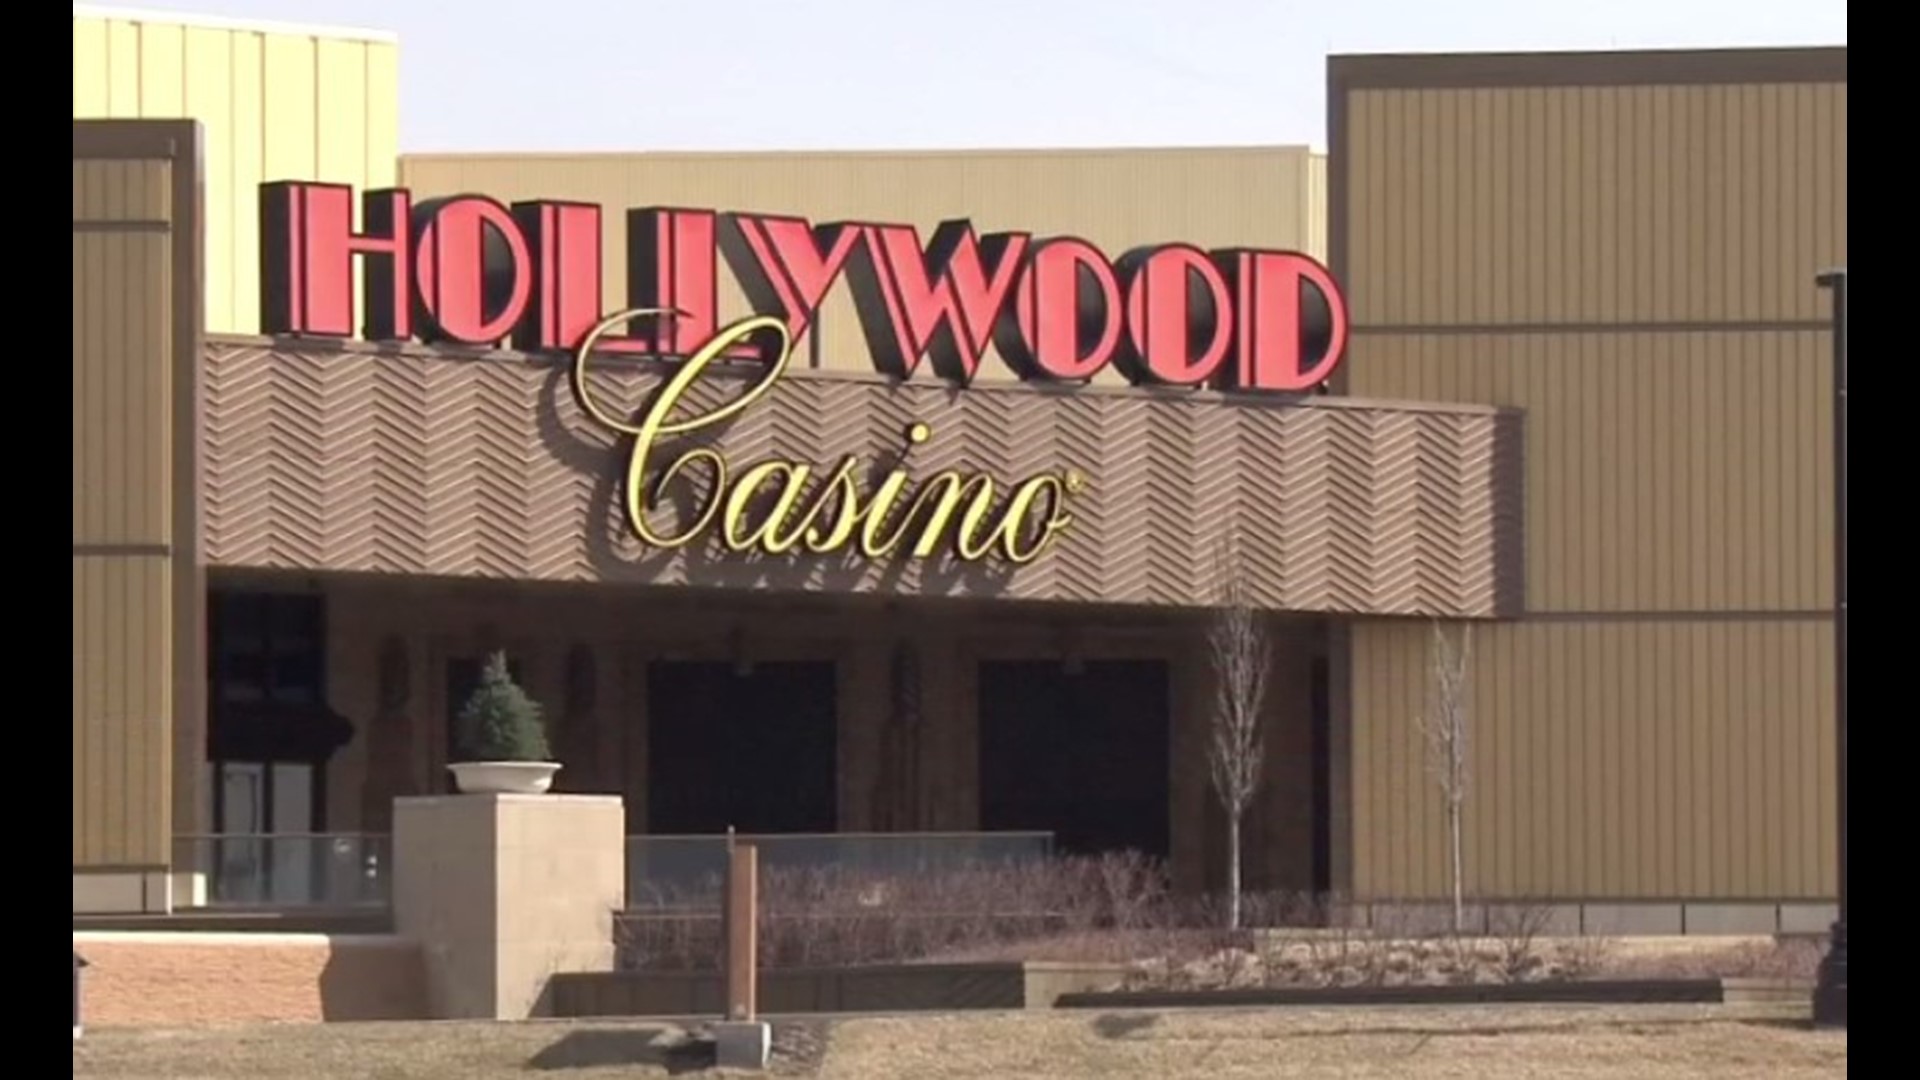 hollywood casino columbus ohio